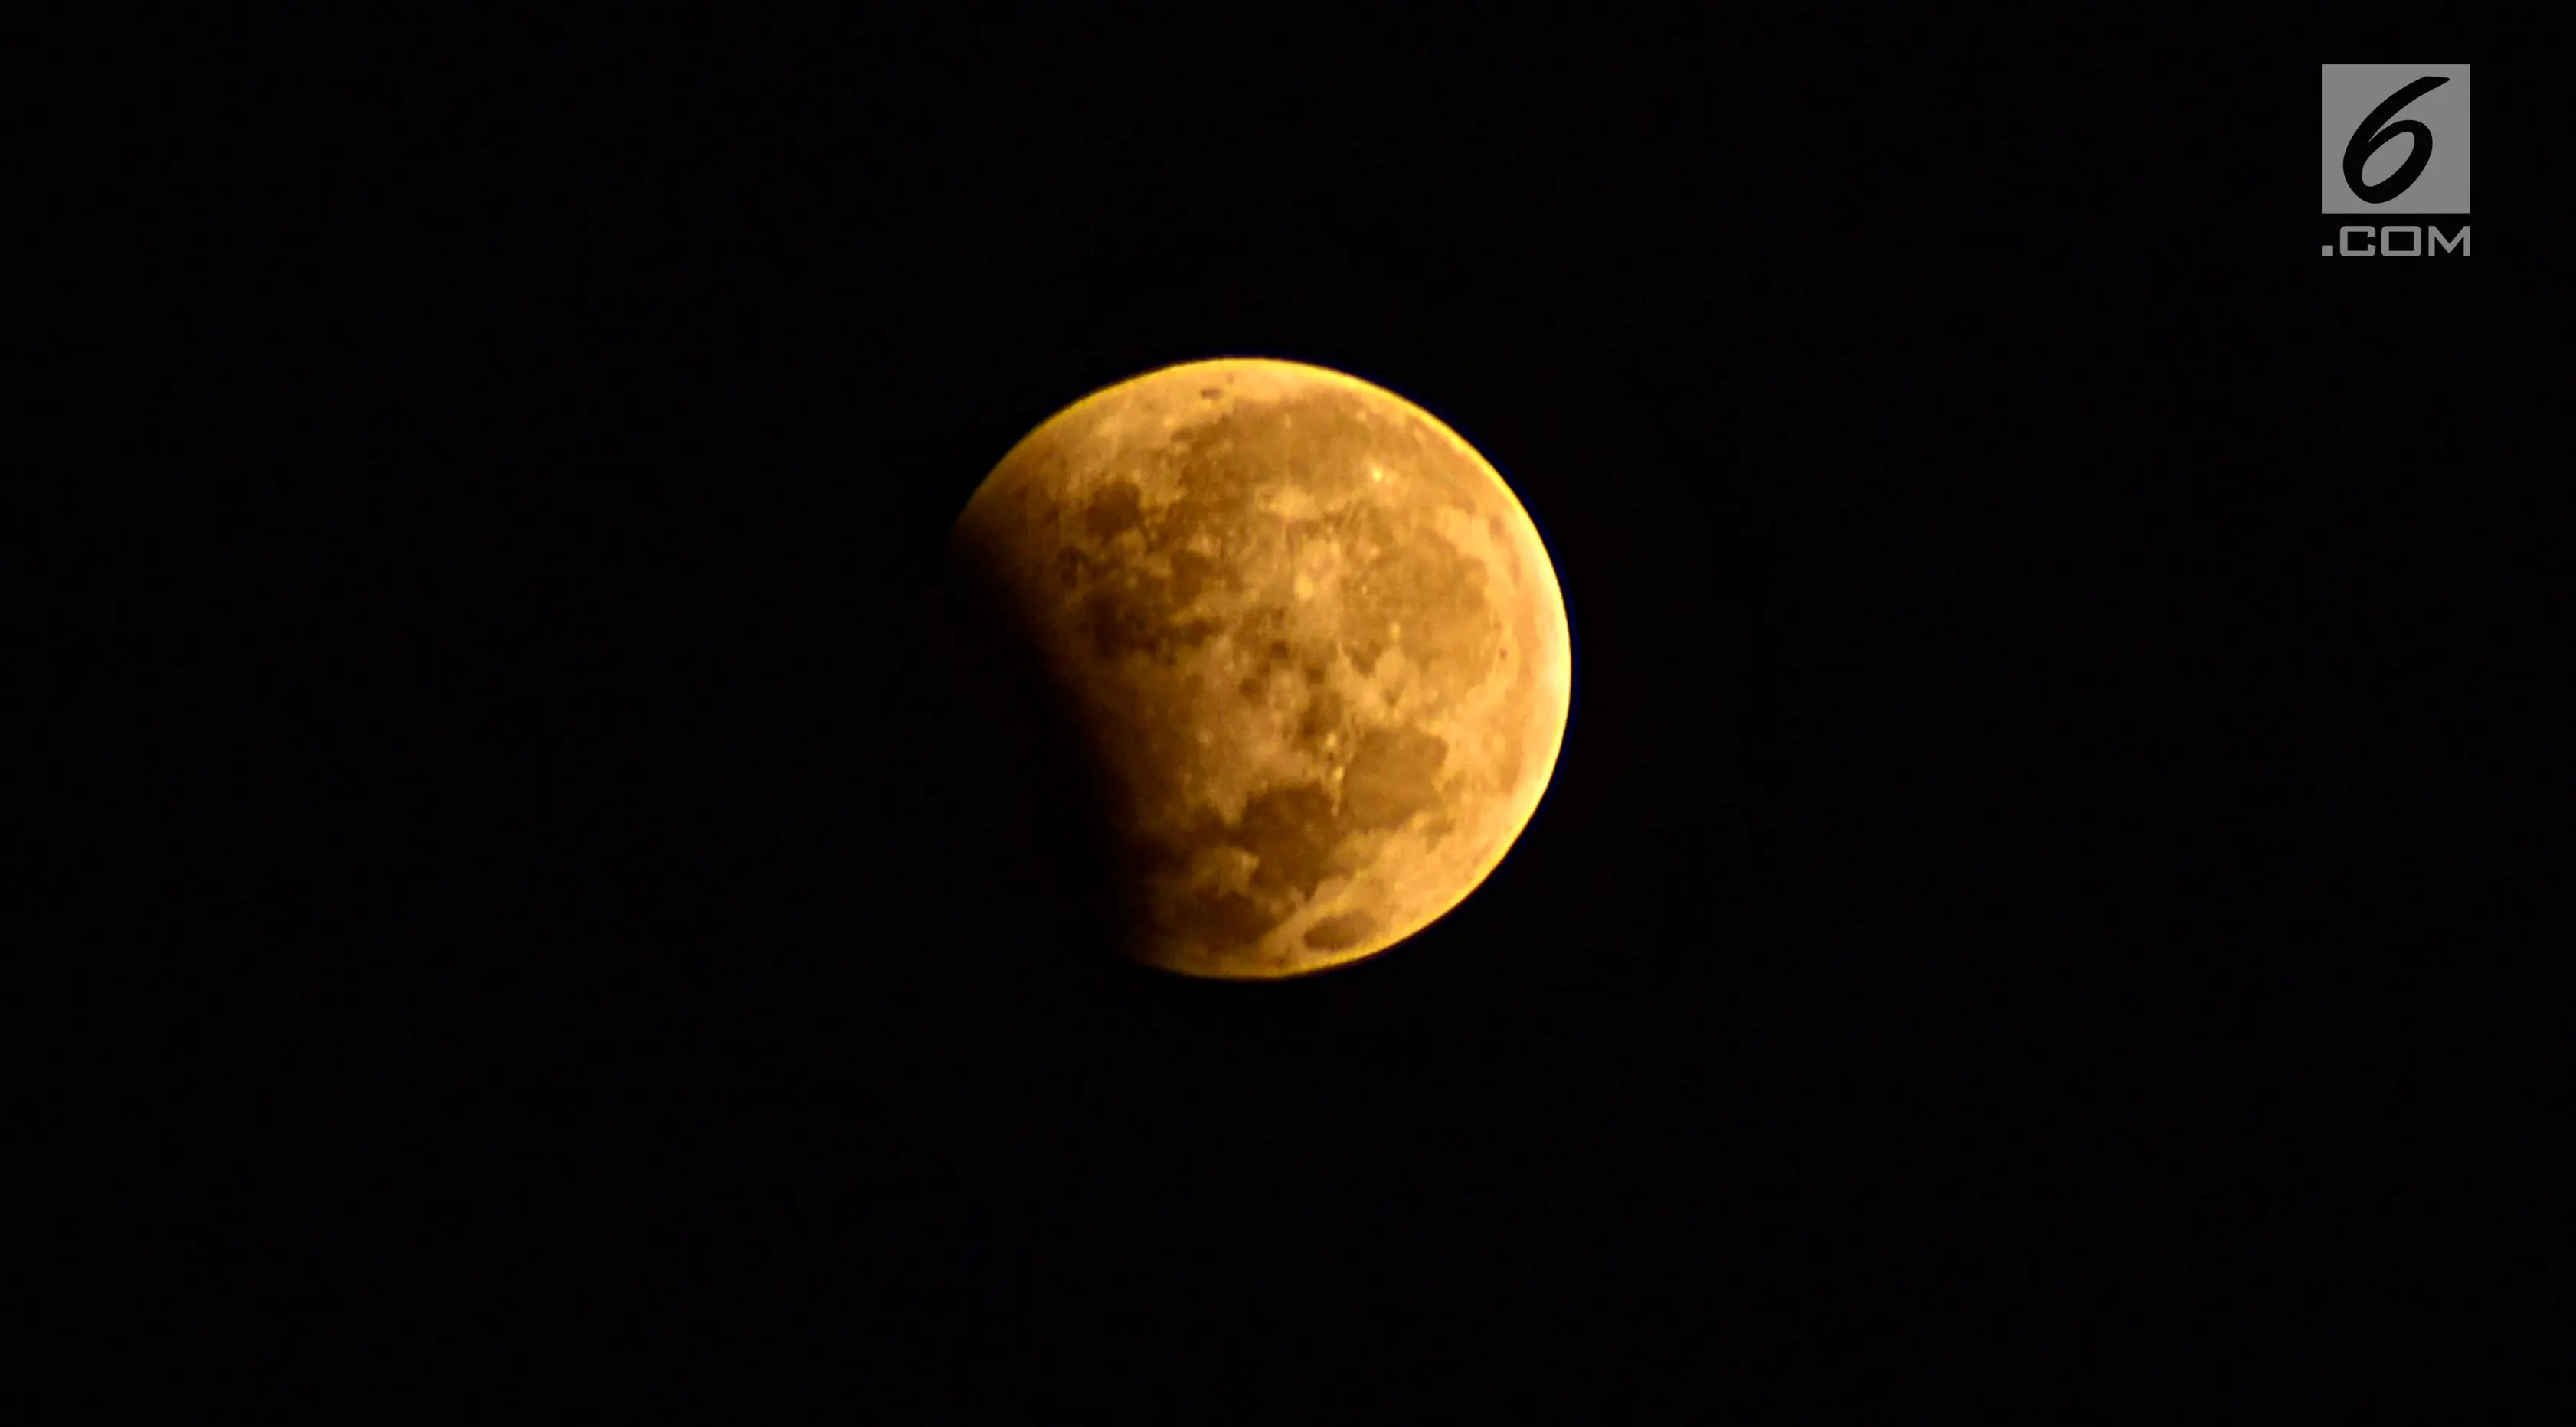 Gerhana bulan parsial (penumbra) terlihat di langit kota Semarang, Jawa Tengah, Selasa (8/8). Gerhana merupakan peristiwa ketika cahaya matahari terhalangi oleh Bumi sehingga tidak semuanya sampai ke bulan. (Liputan6.com/Gholib)